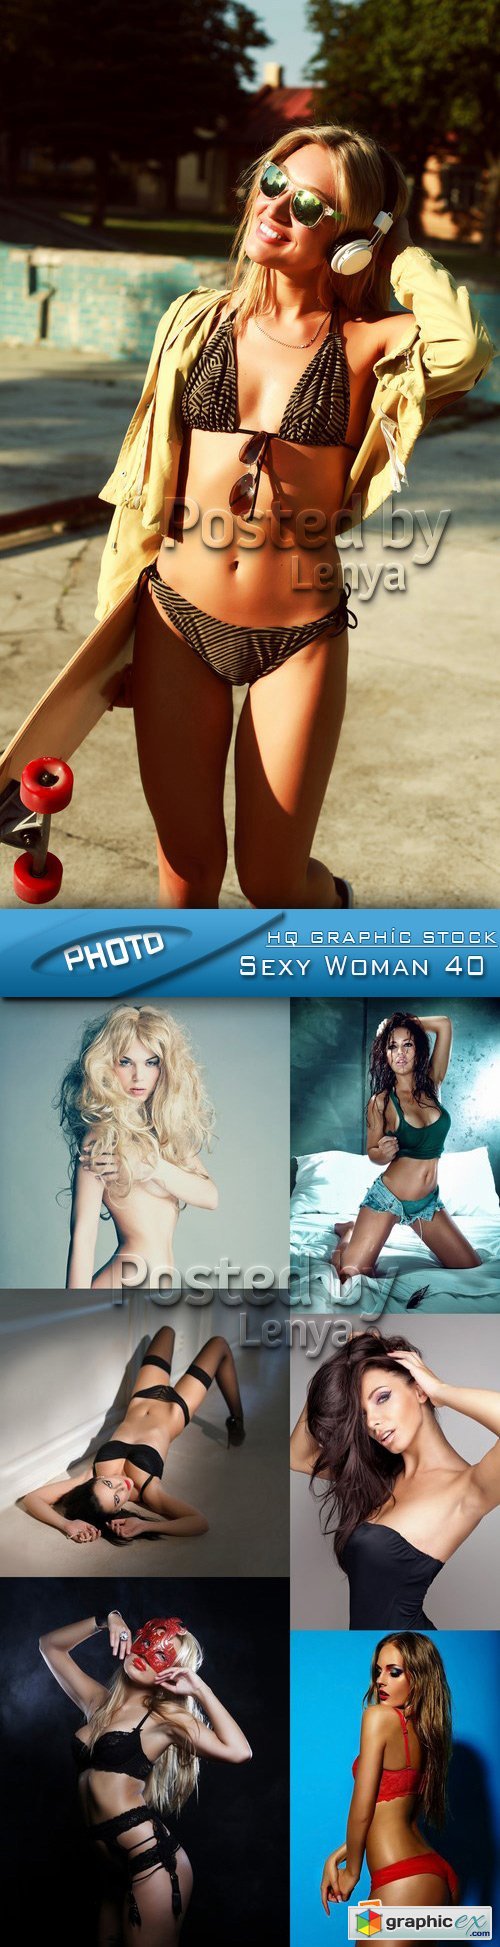 Stock Photo - Sexy Woman 40